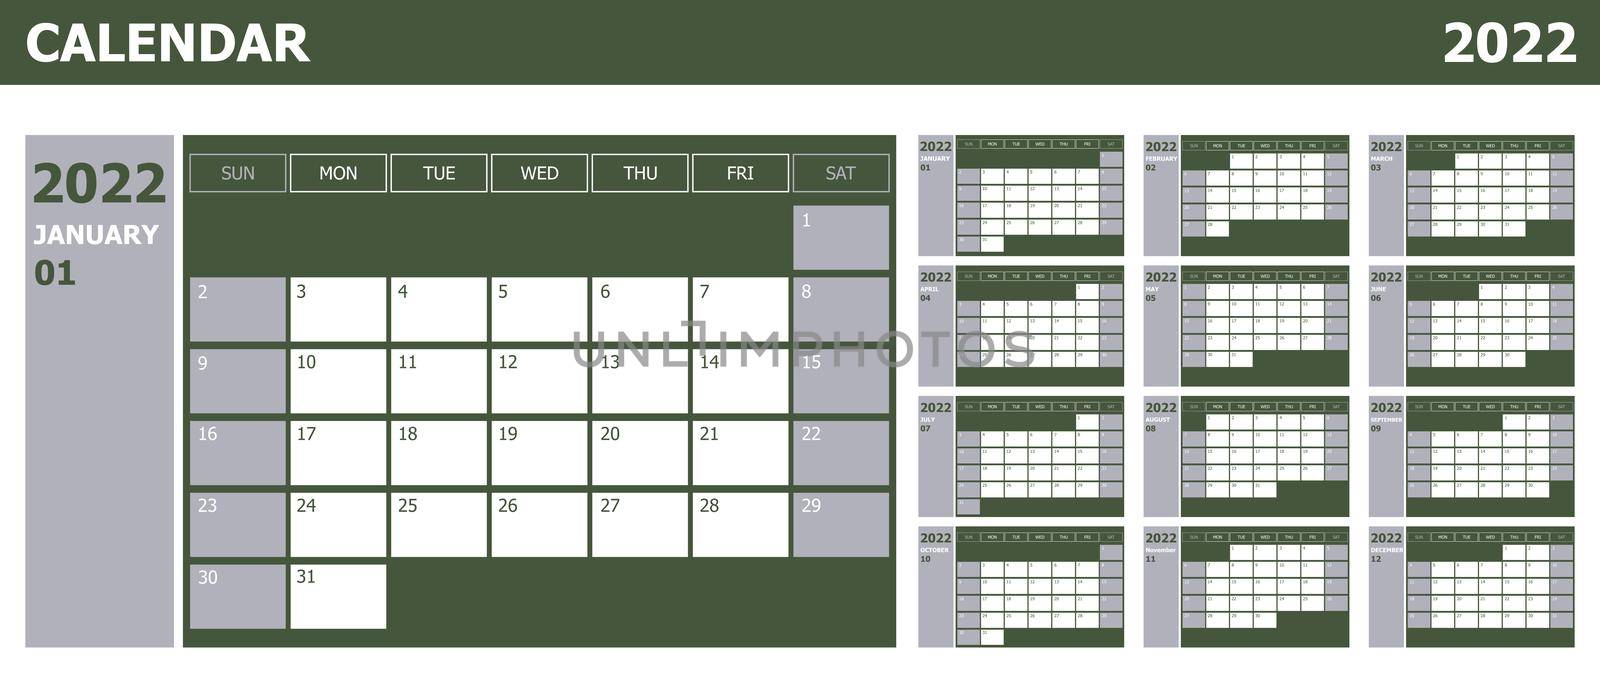 Calendar 2022 week start Sunday design planner with green and grey, stock vector